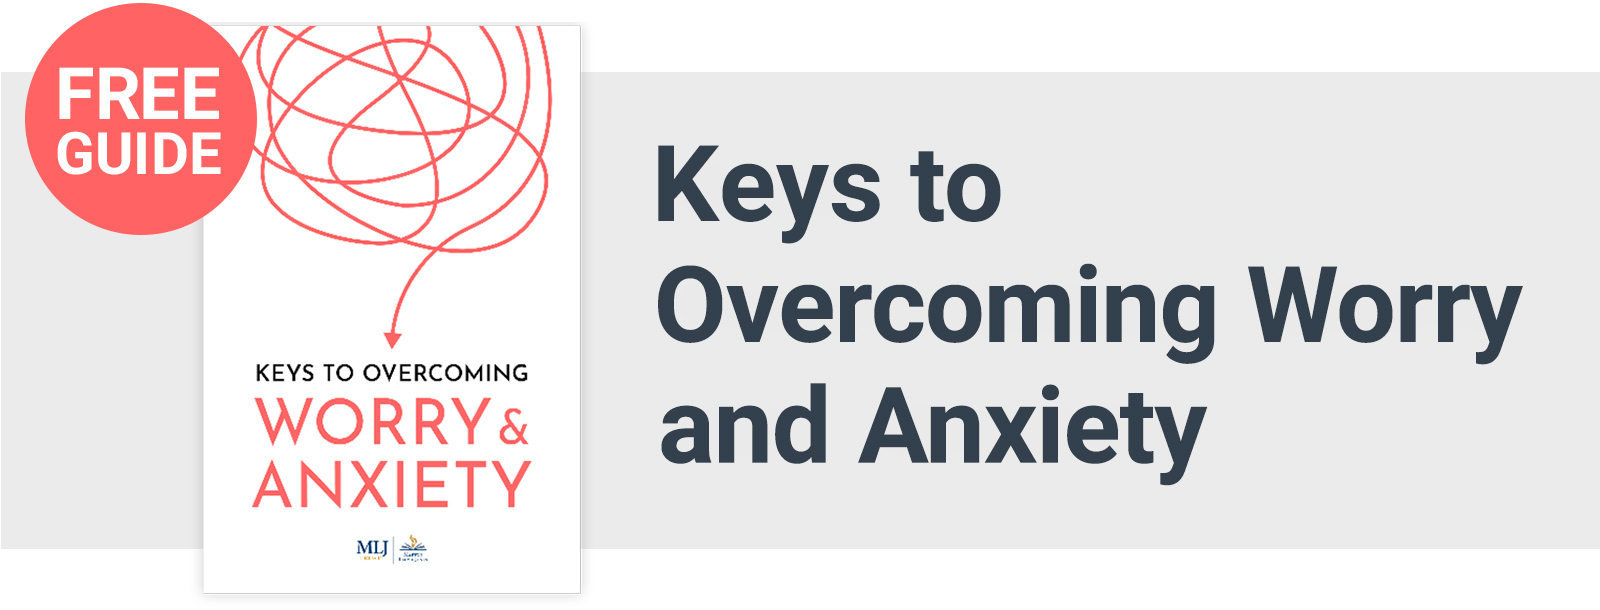 6 Keys to Overcoming Spiritual Depression - Free Guide